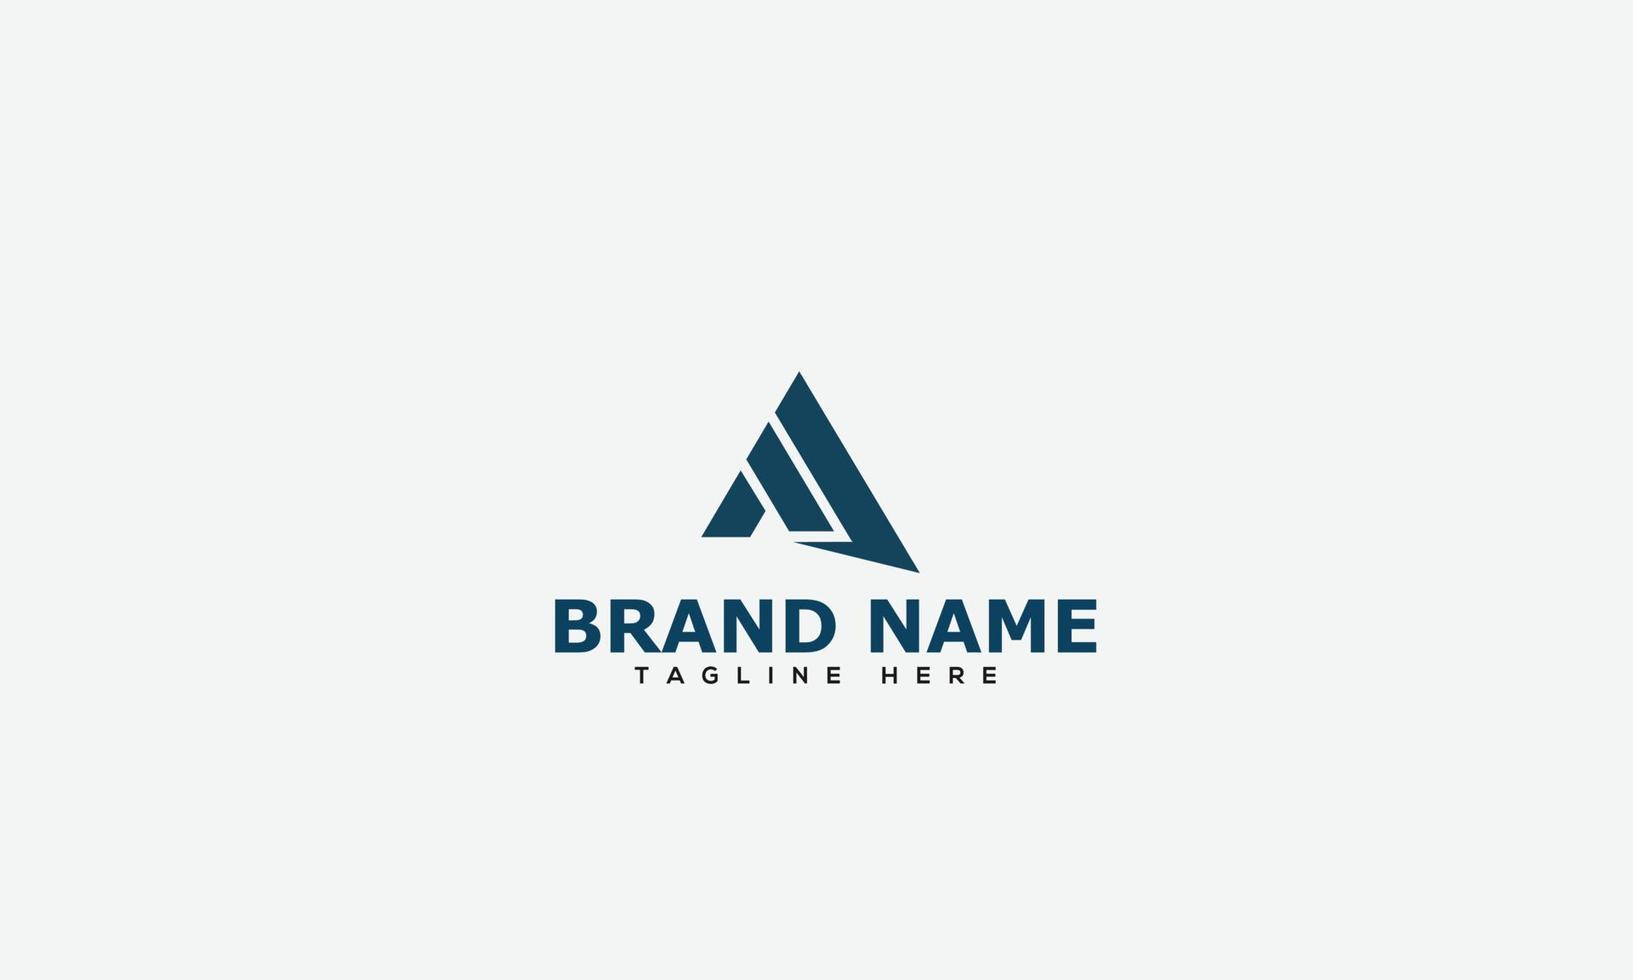 A Logo Design Template Vector Graphic Branding Element.